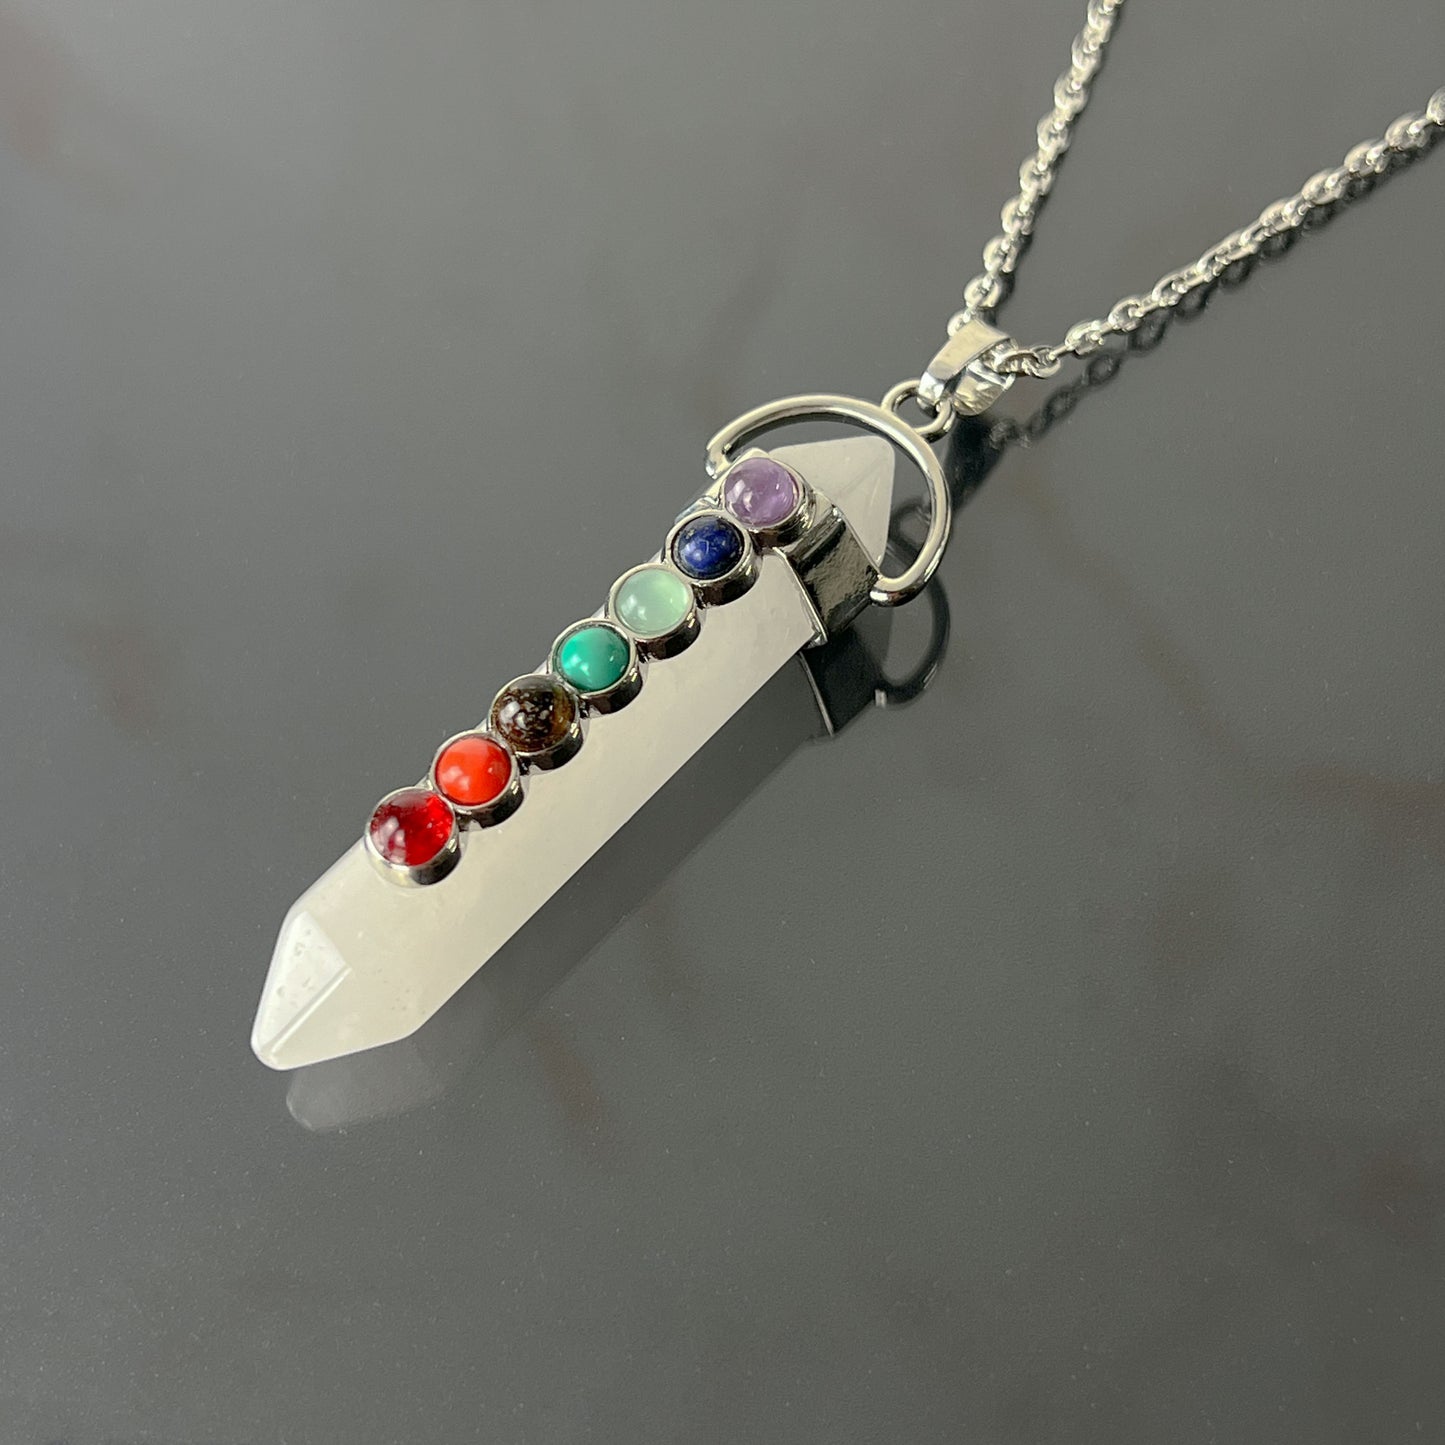 7 chakras quartz necklace